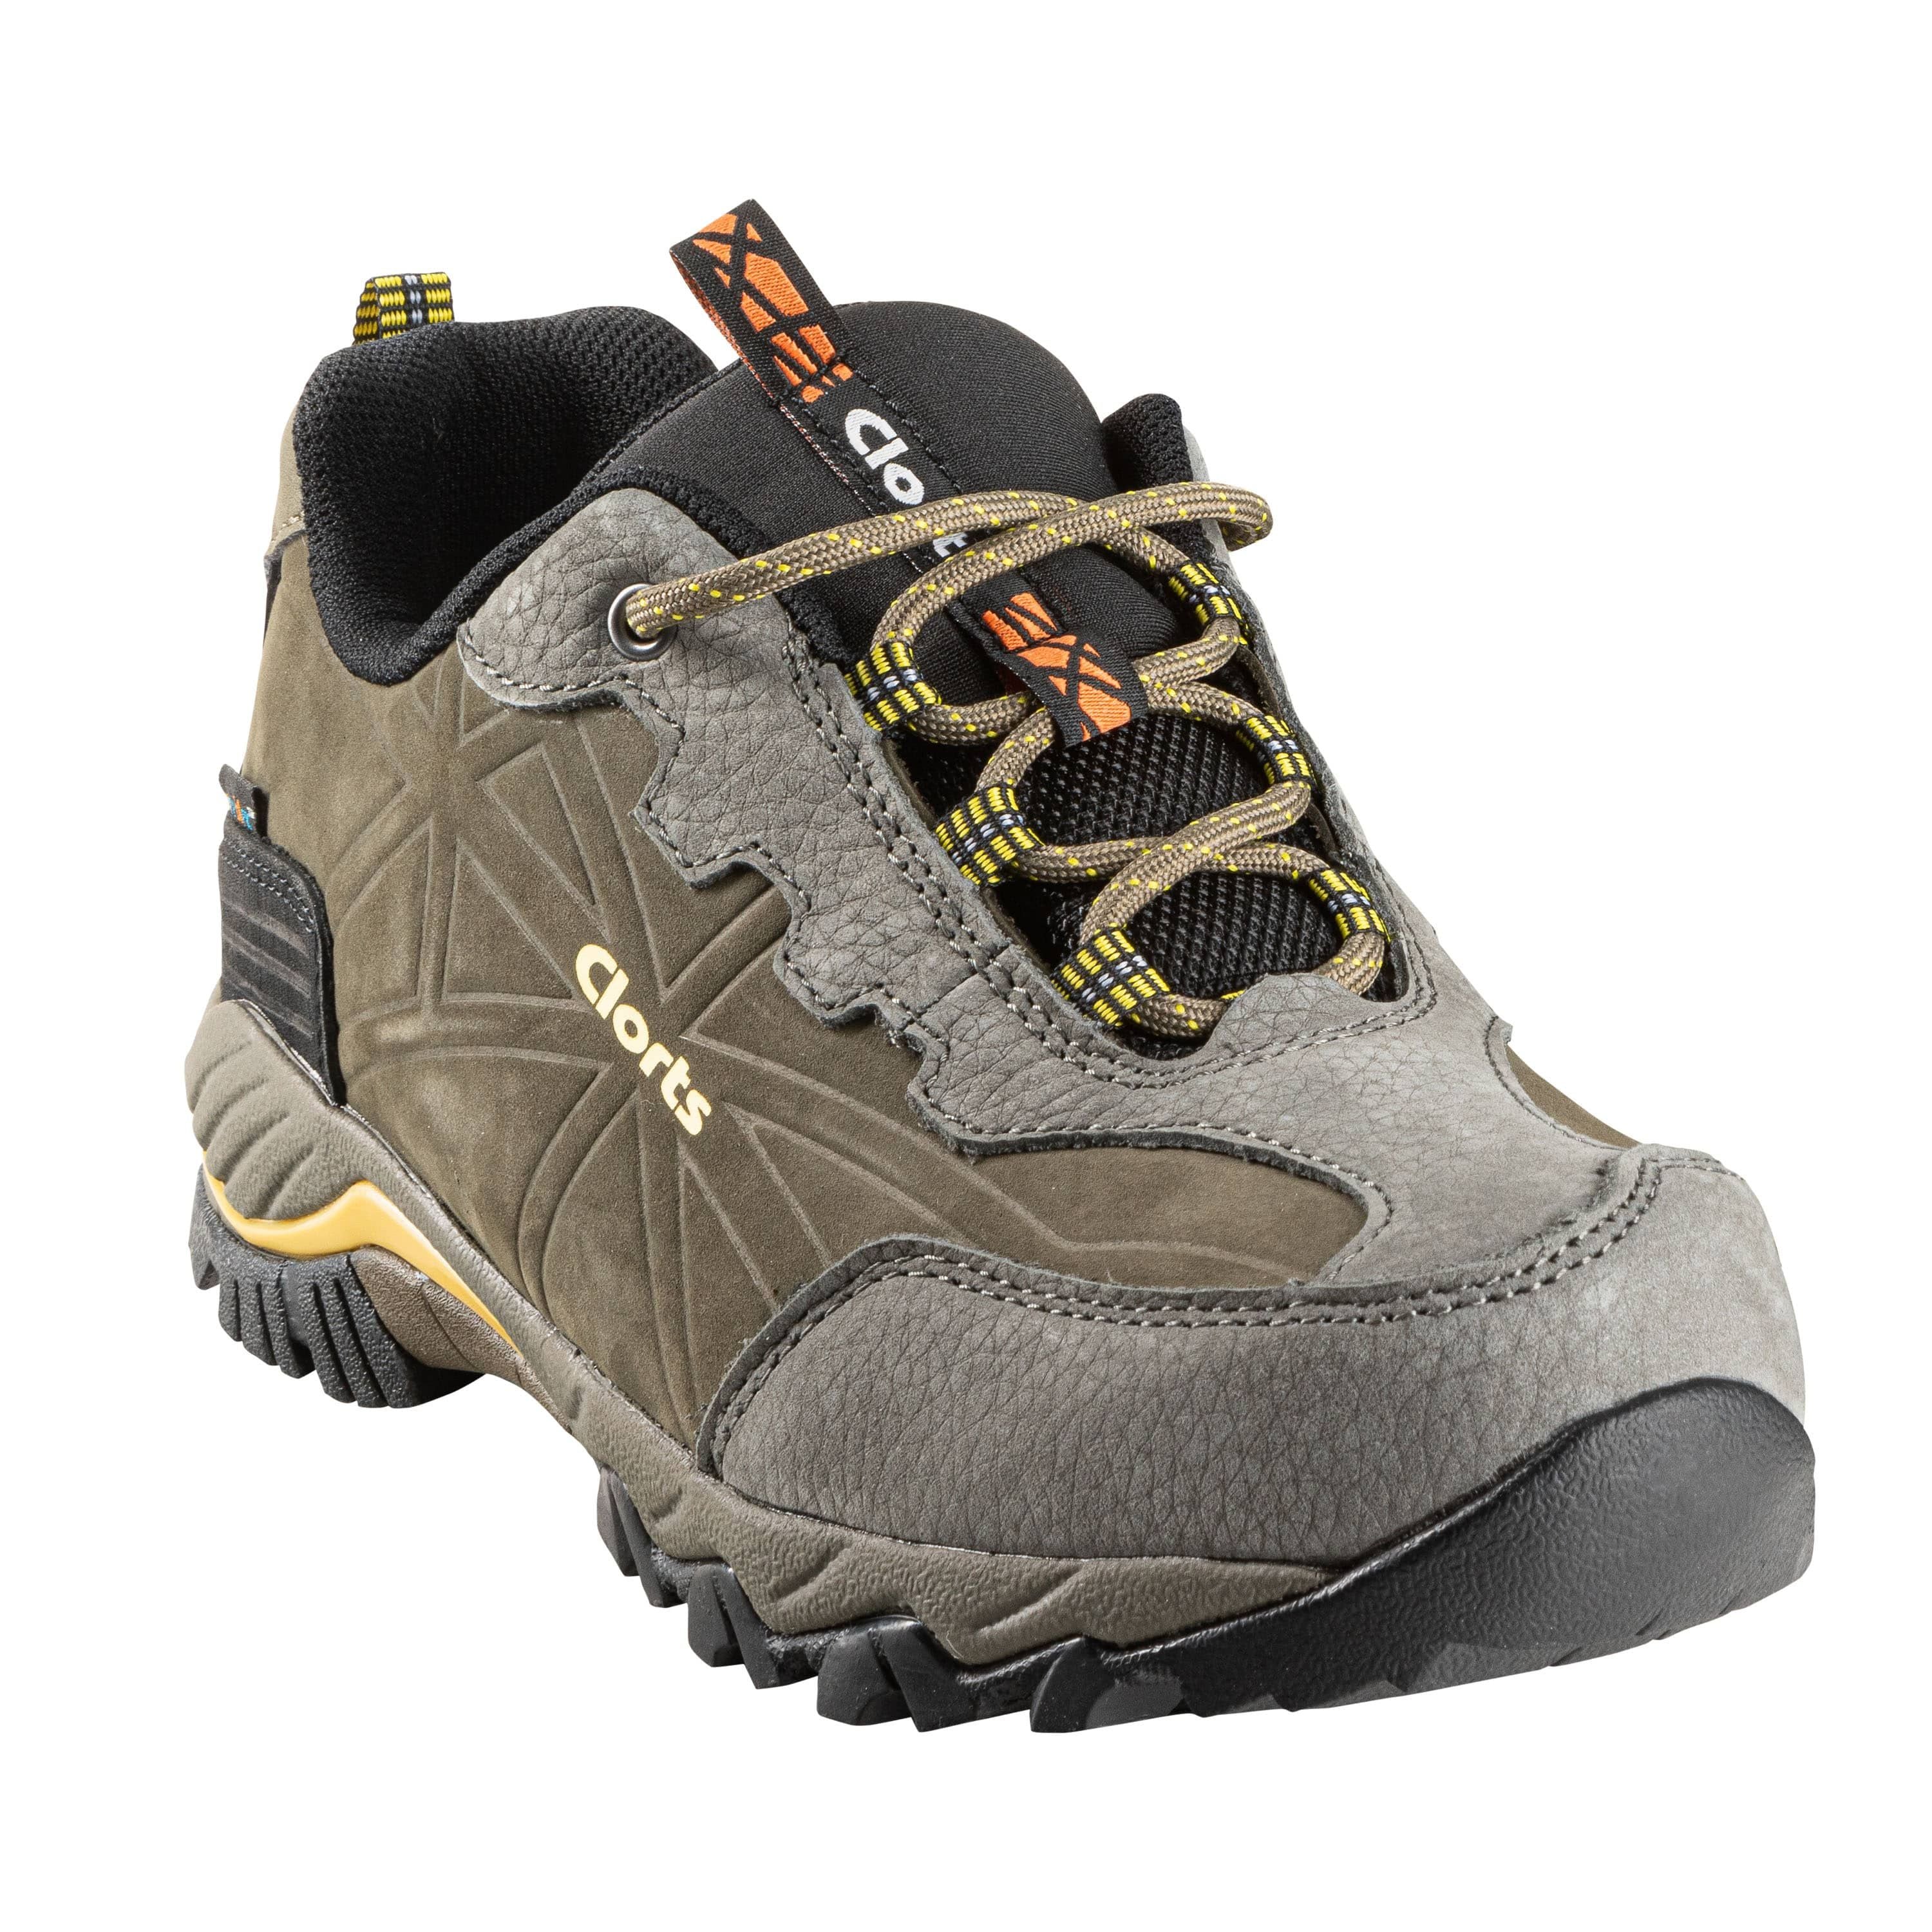 "Strive" Hiking shoes - Men's